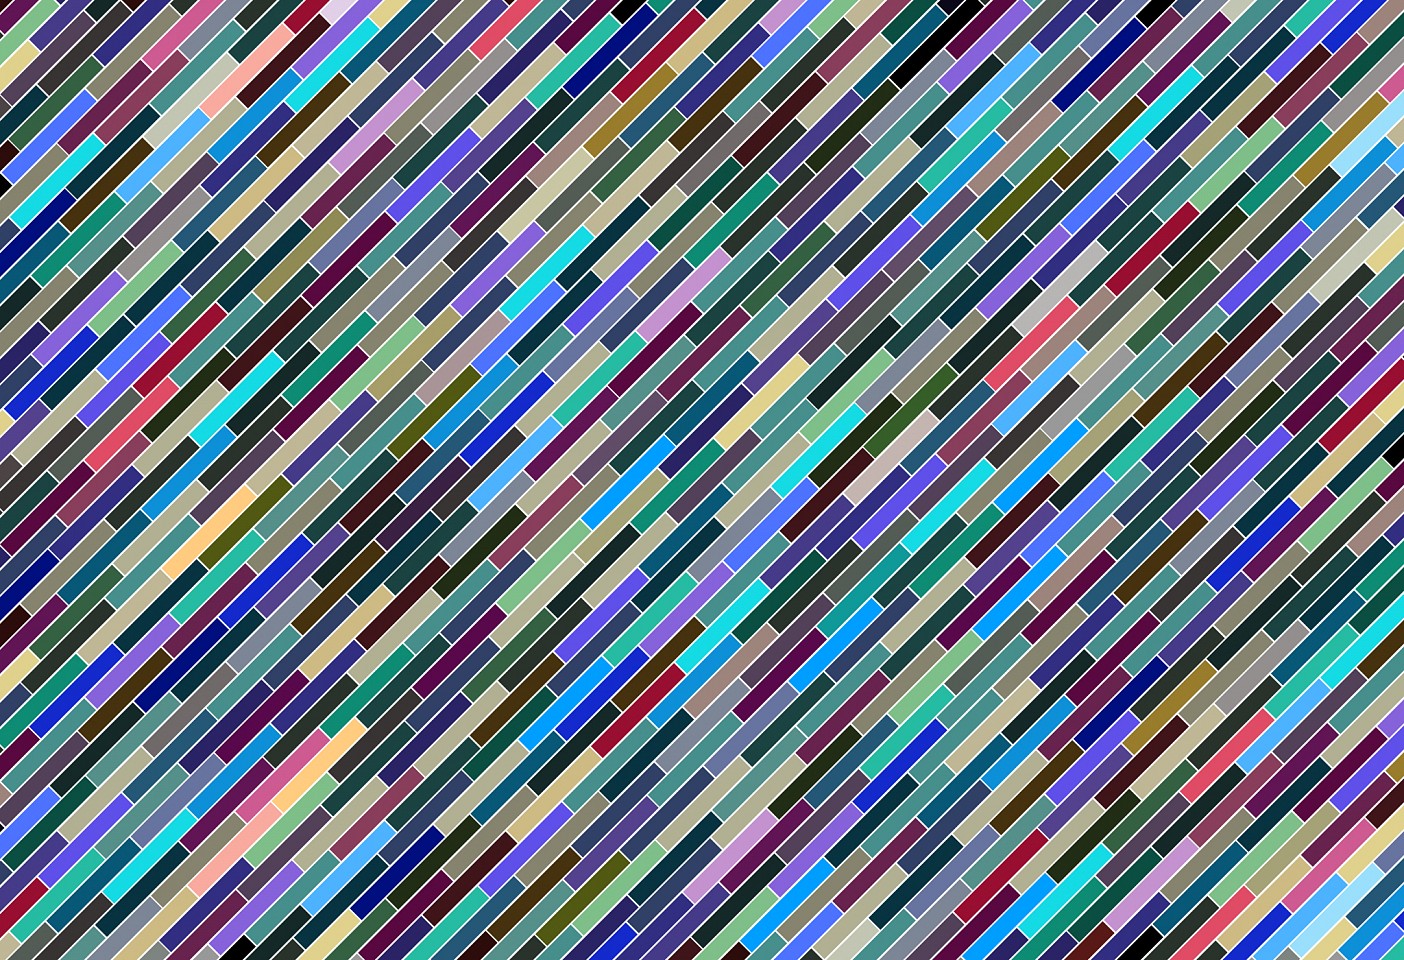 Dane Albert, Color Blocks #48 Day, 2023
Acrylic on canvas (Concept), 48 x 72 in. (121.9 x 182.9 cm)
Series of colored blocks in multiple configurations
DA.cb-2023-048-day